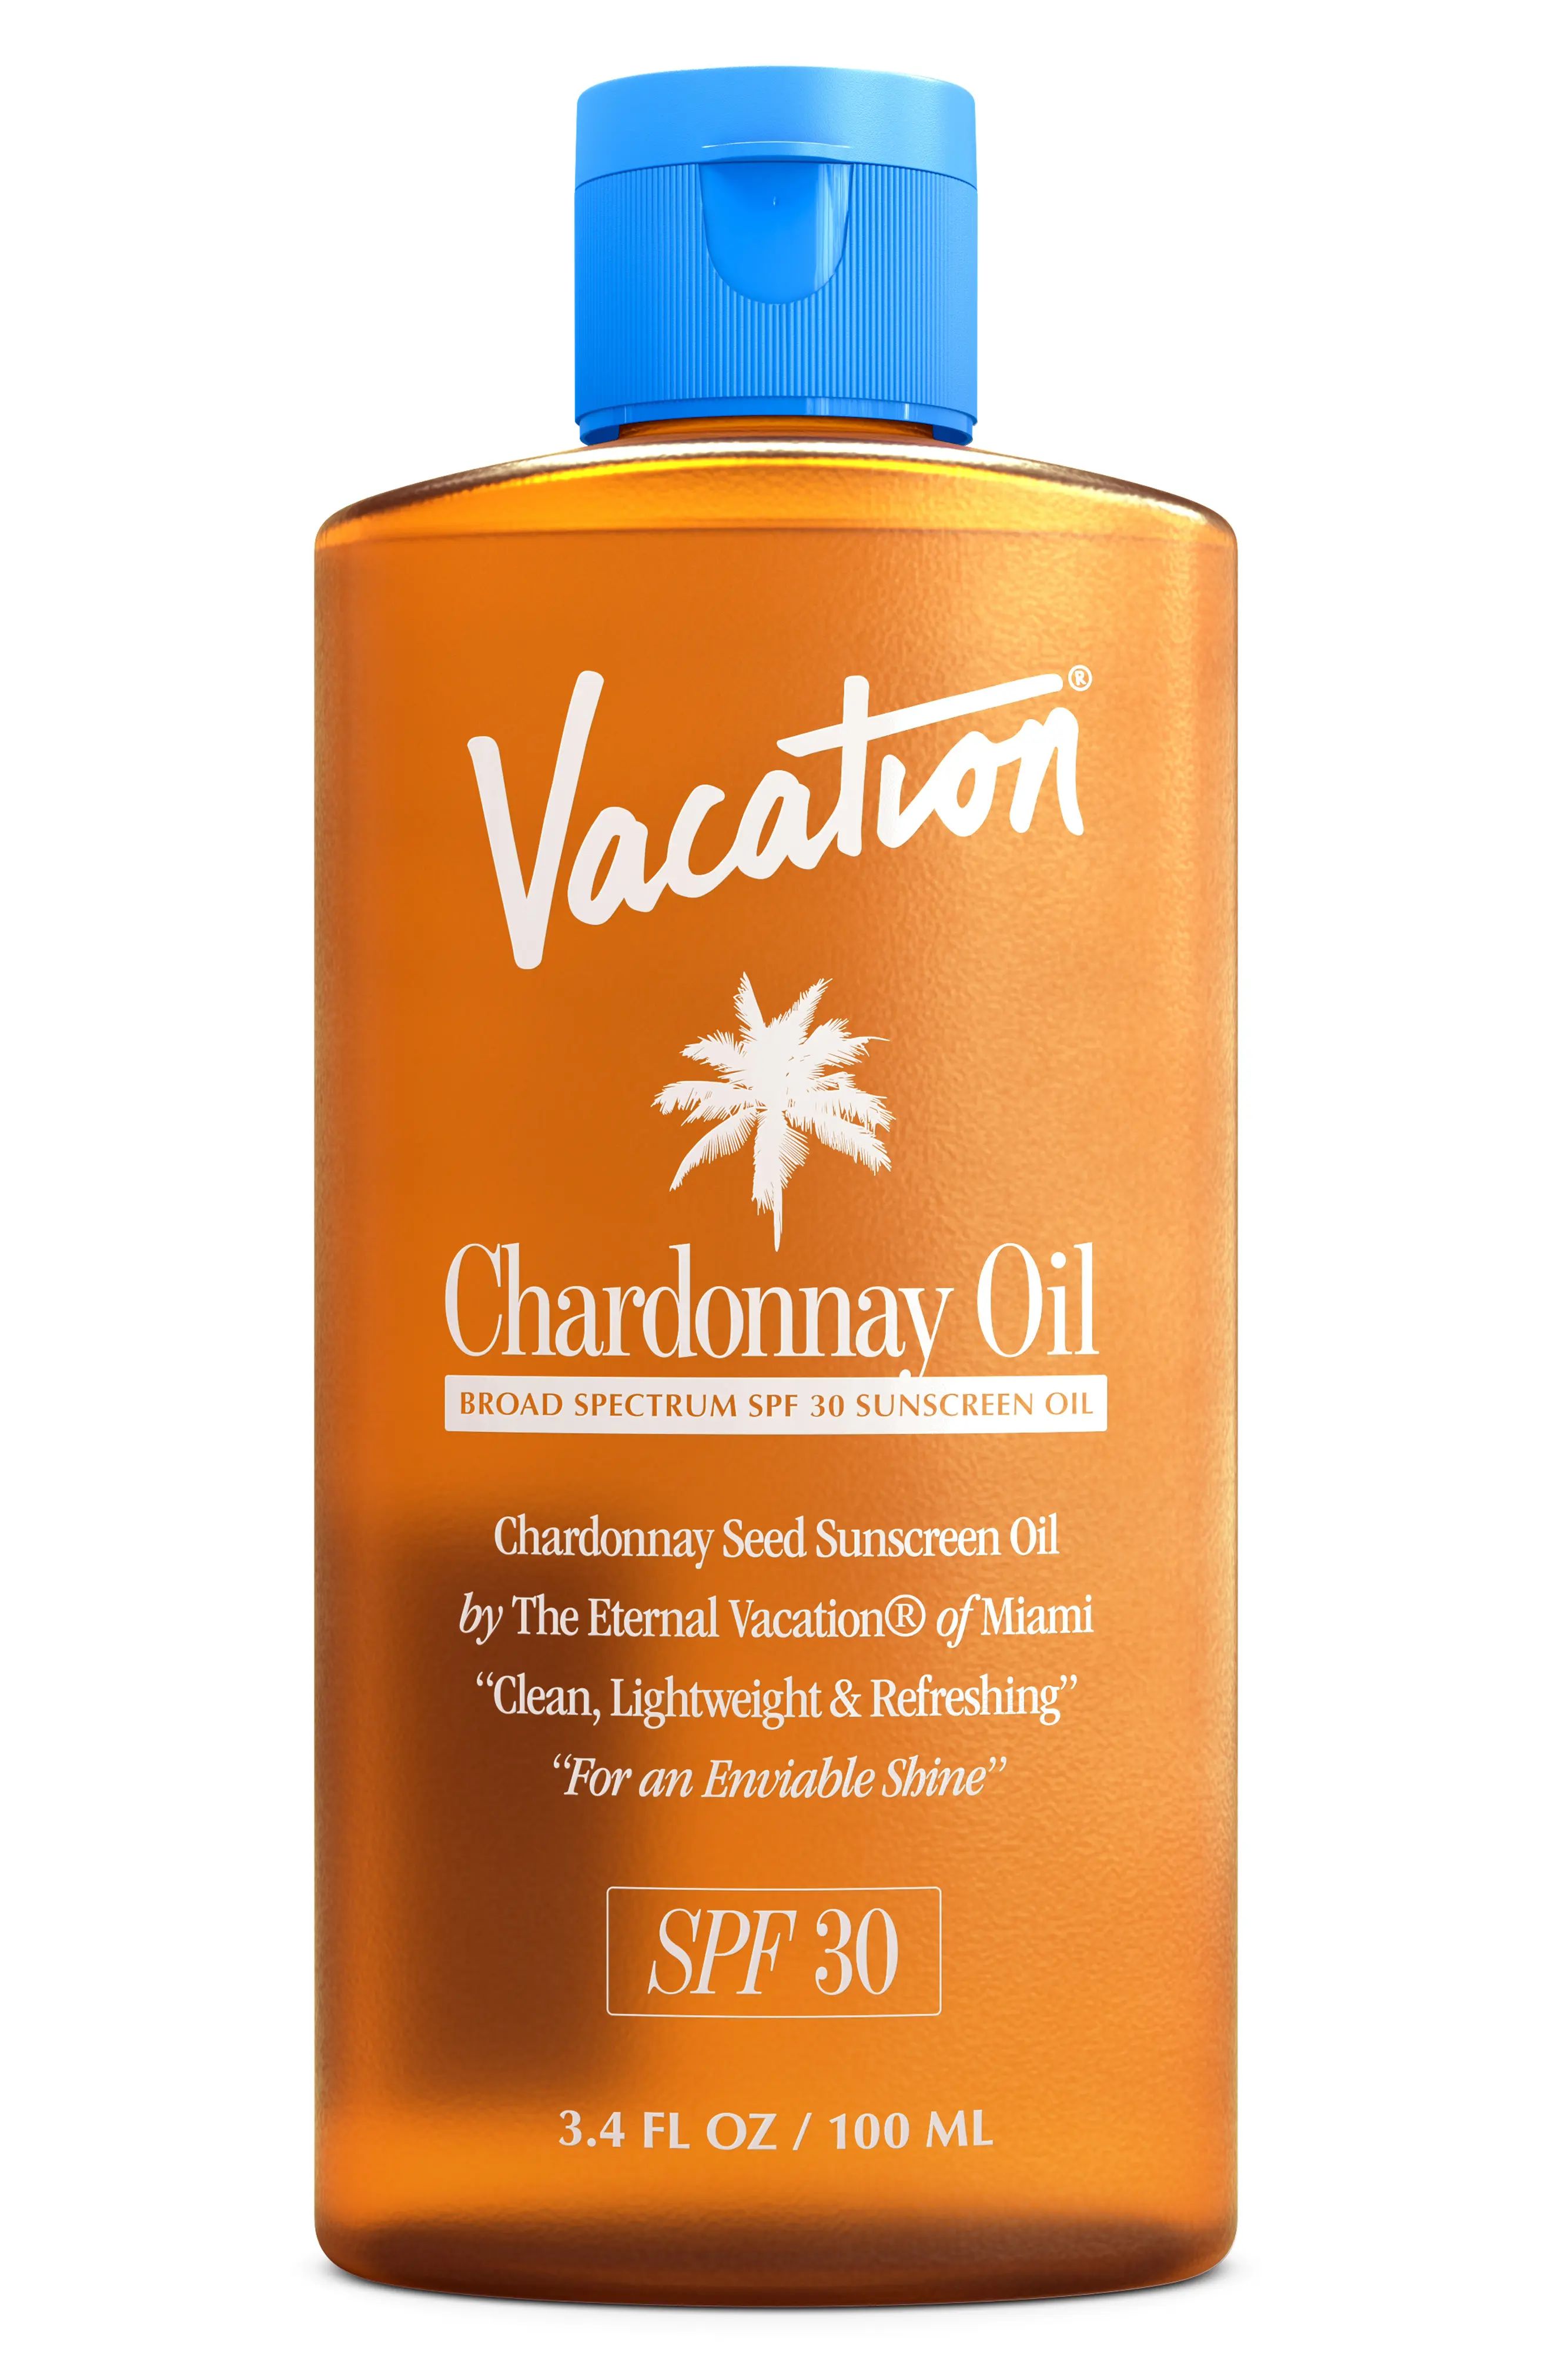 Vacation Chardonnay Oil Broad Spectrum SPF 30 Sunscreen Oil at Nordstrom, Size 3.4 Oz | Nordstrom